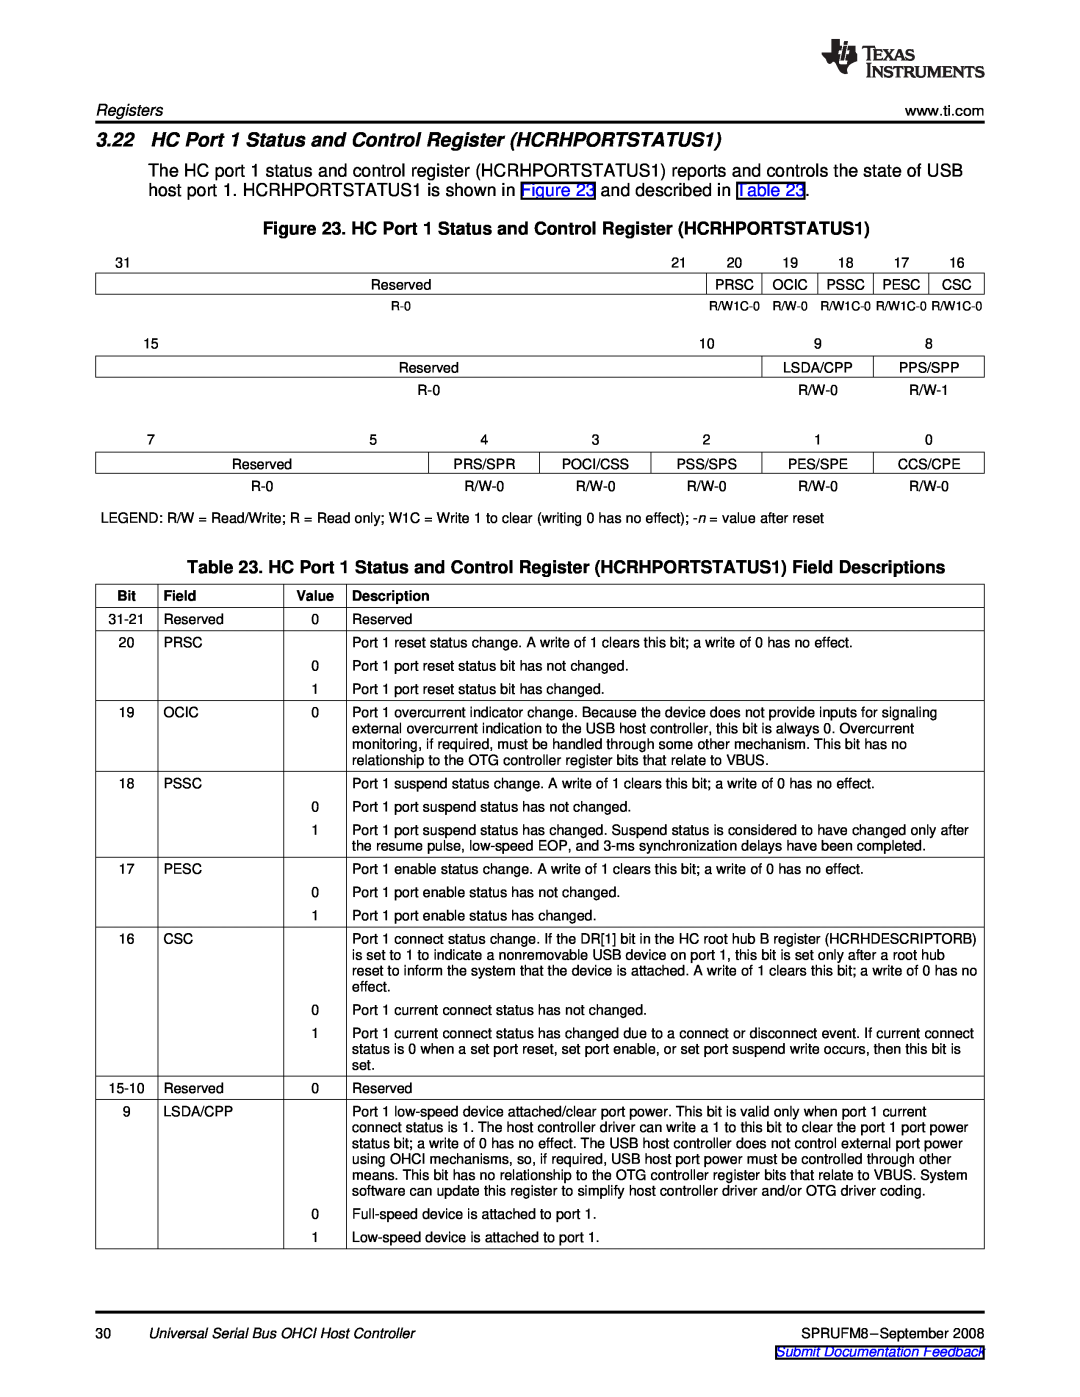 Texas Instruments TMS320C6747 DSP HC Port 1 Status and Control Register HCRHPORTSTATUS1, Registers, Field, Description 